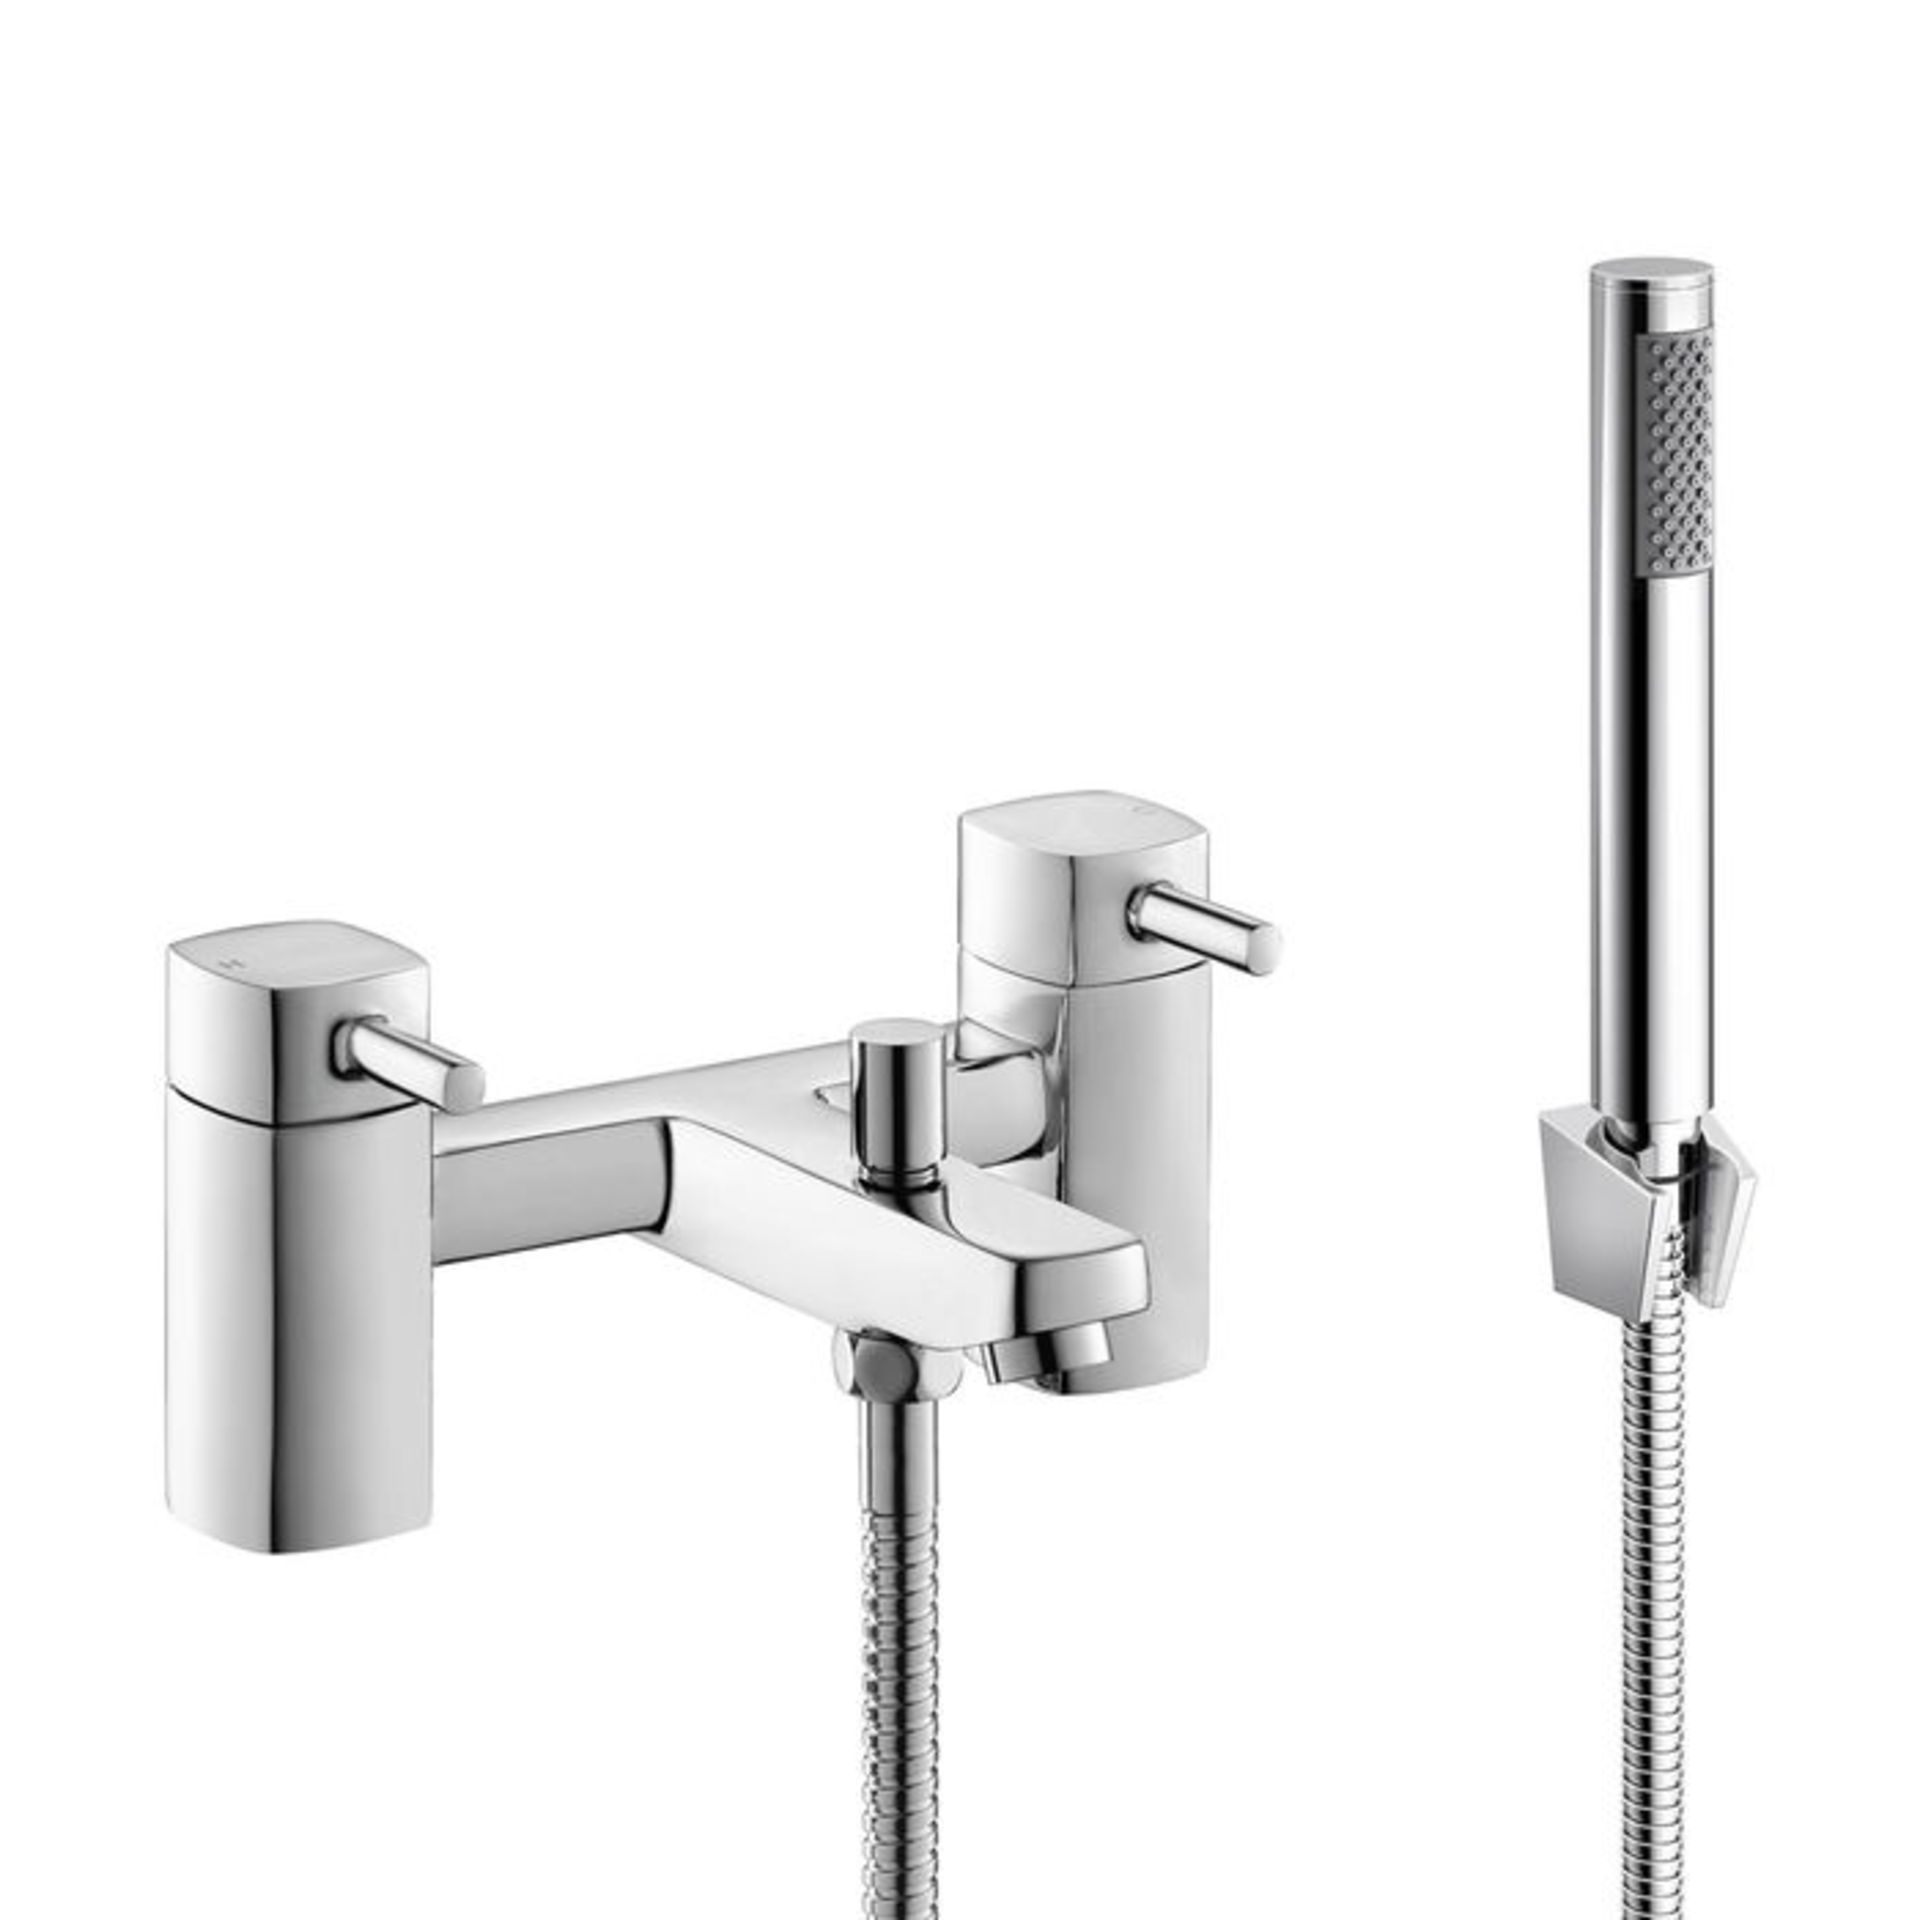 (G45) Avon Bath Mixer Tap & Handheld Shower Head. Chrome Plated Solid Brass 1/4 turn solid brass